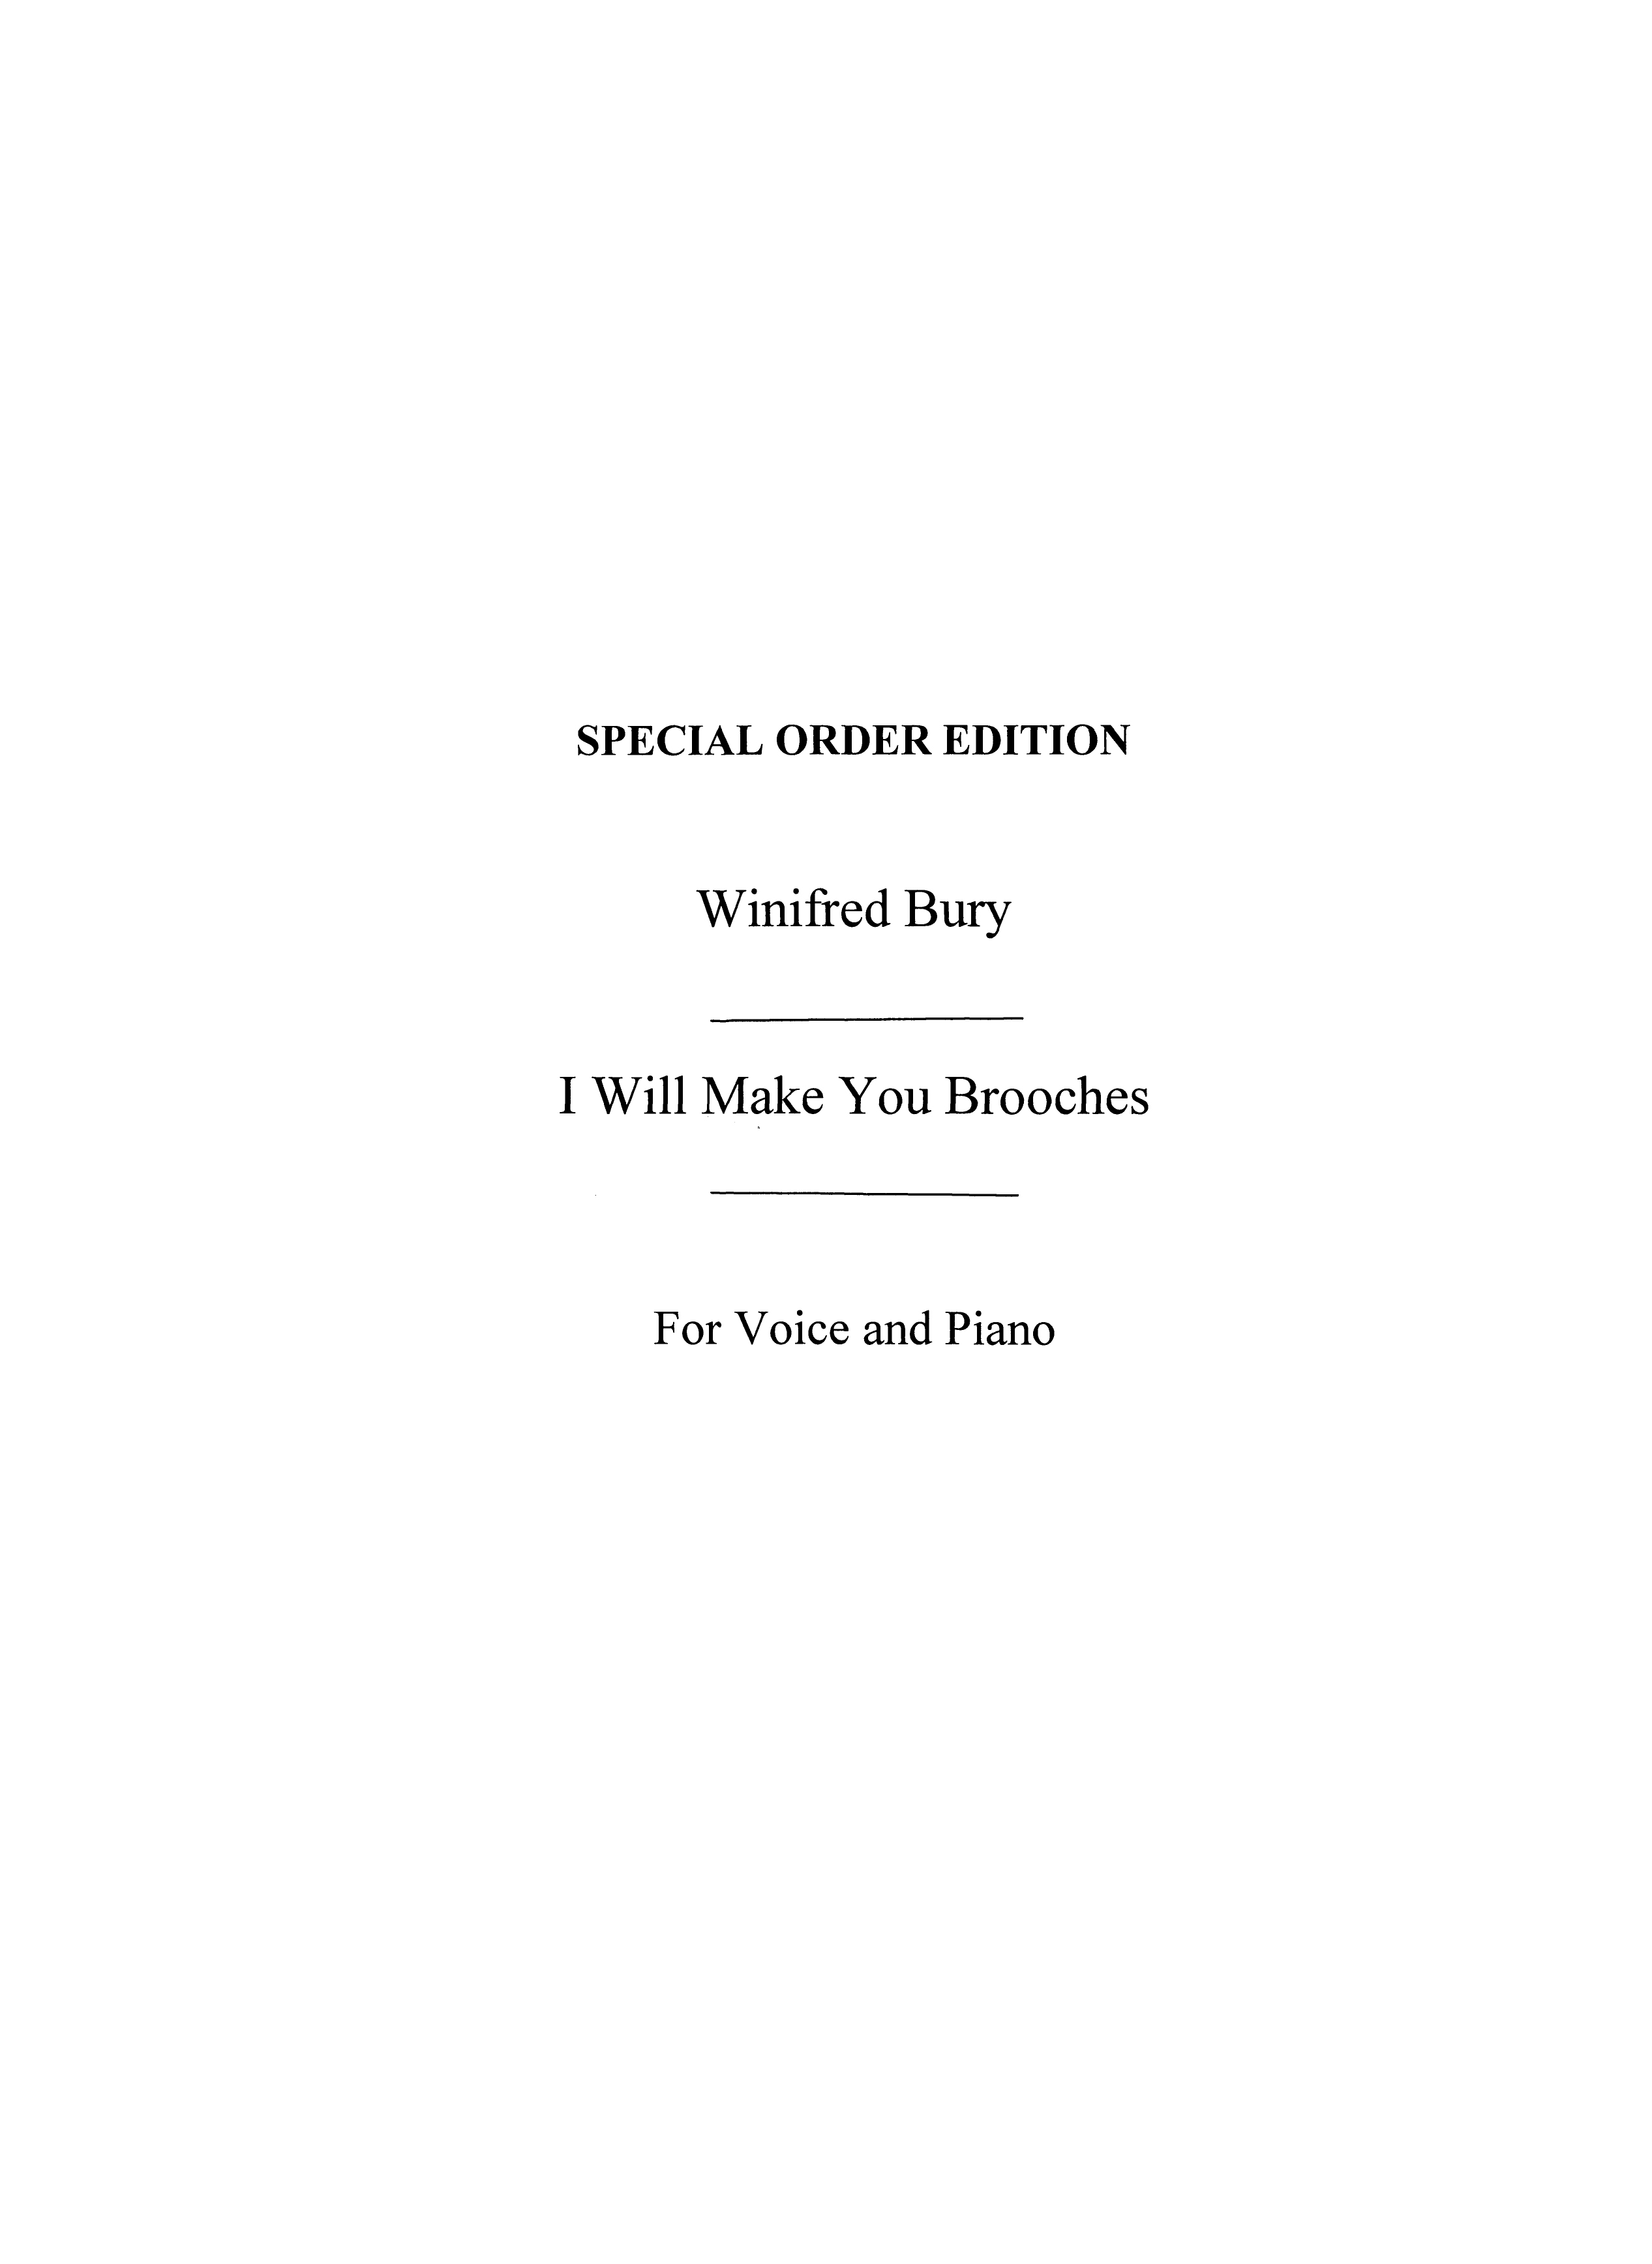 Winifred Bury: I Will Make You Brooches Voice/Piano